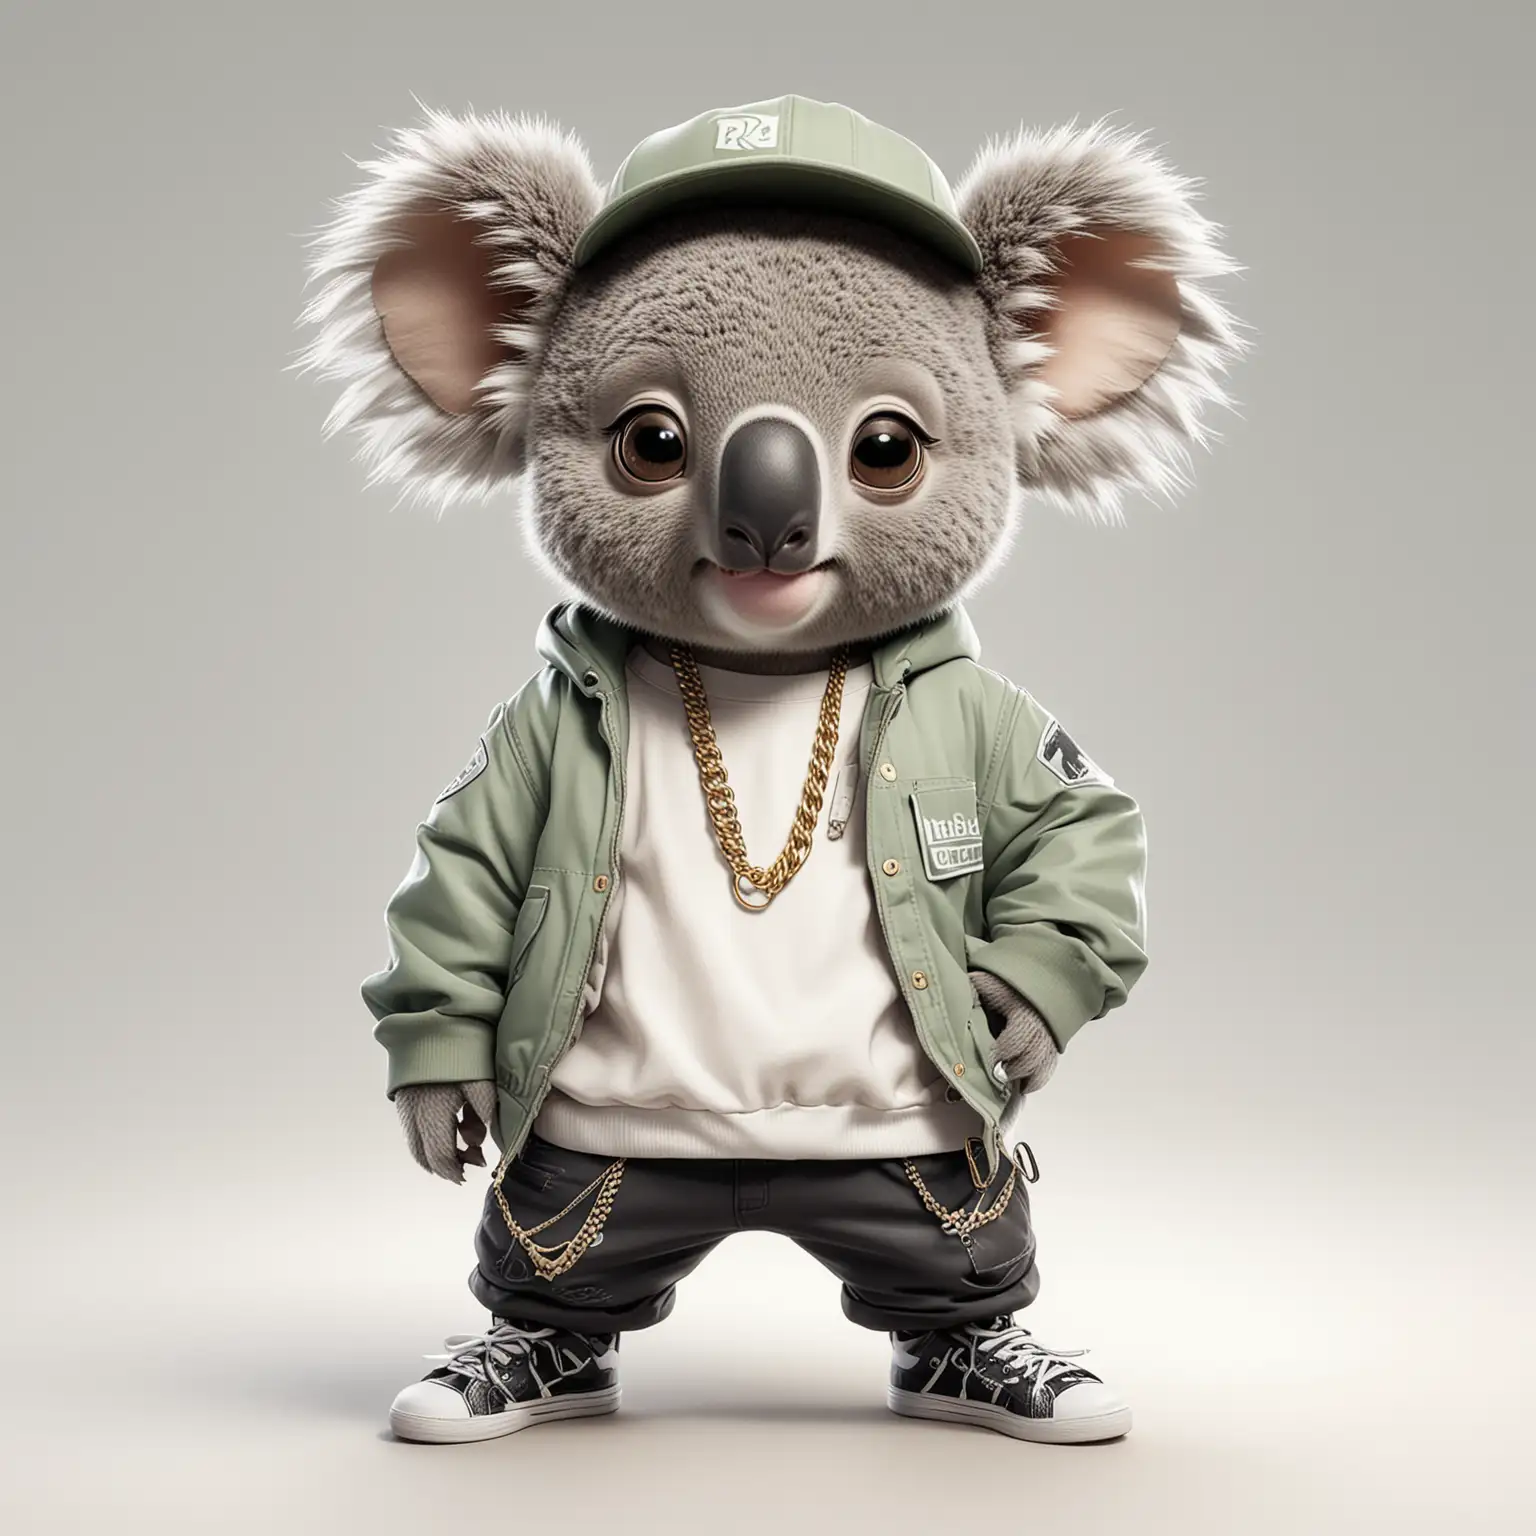 Hip Hop Koala Cartoon Cool Koala with Big Eyes and Hip Hop Clothes